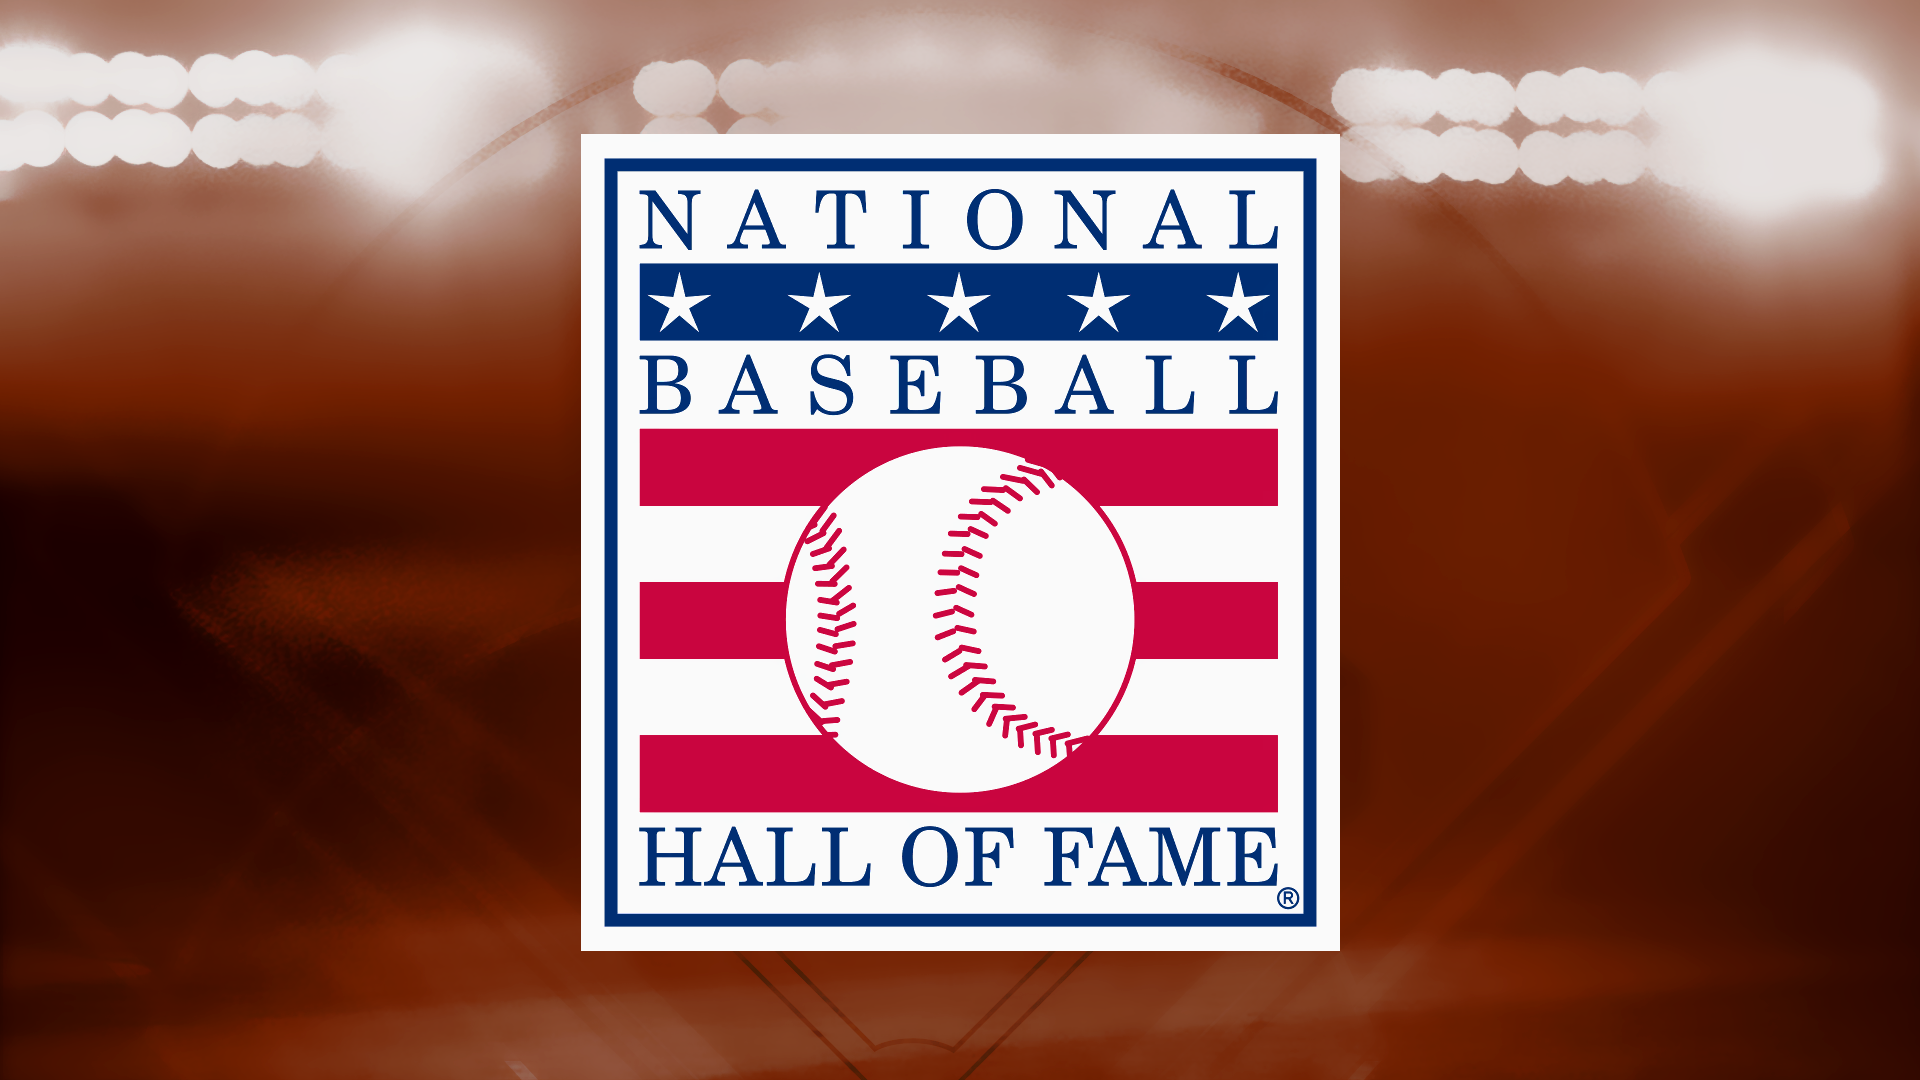 2019 MLB Hall of Fame Ballot Who deserves election? — chops316 on Scorum